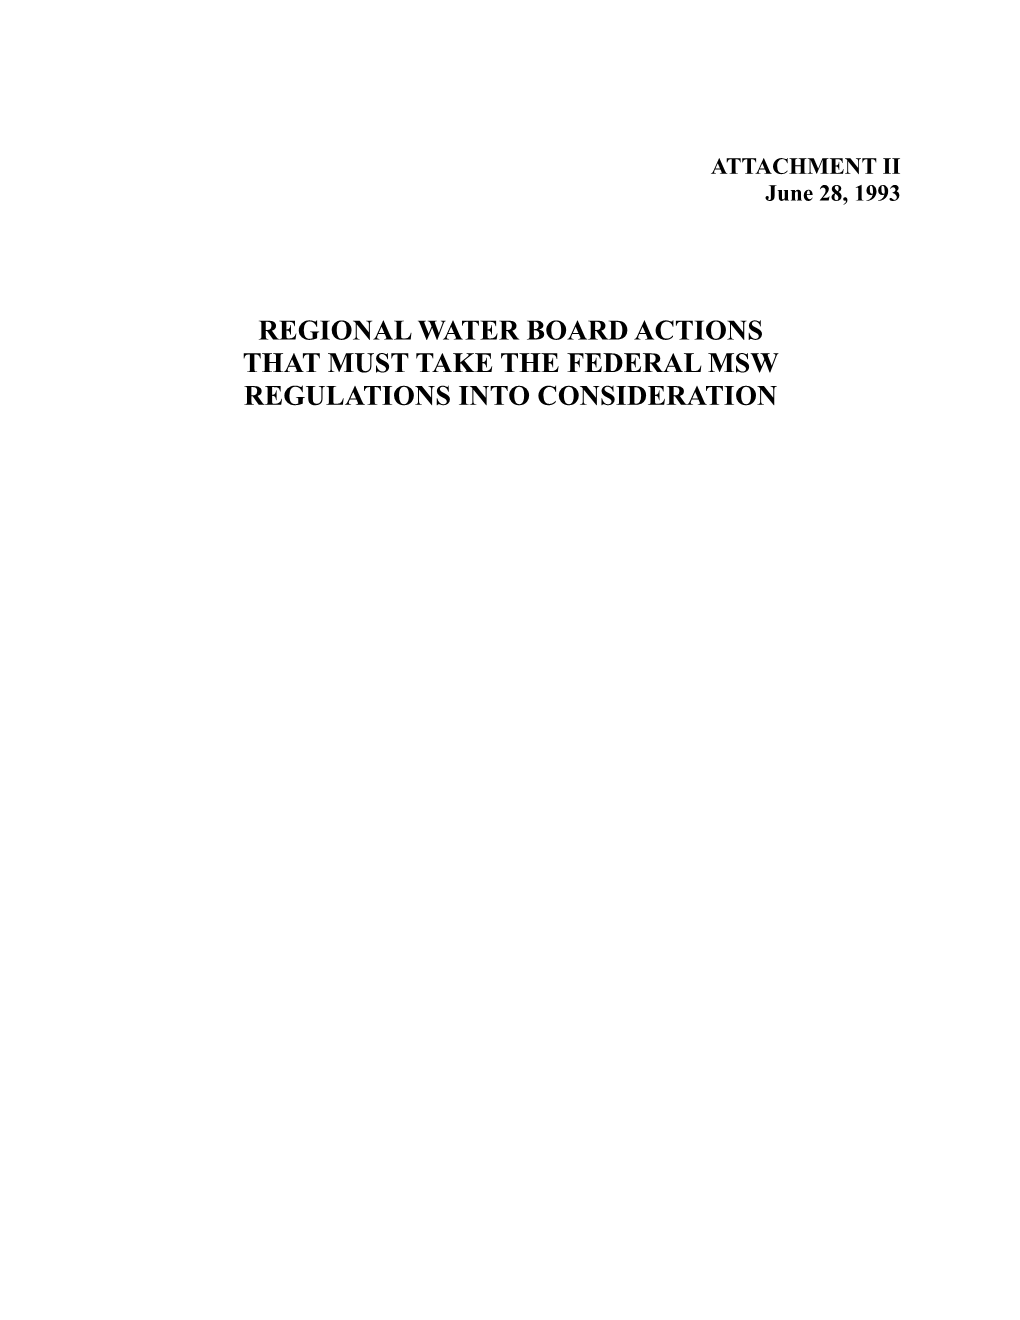 Regional Water Board Actions